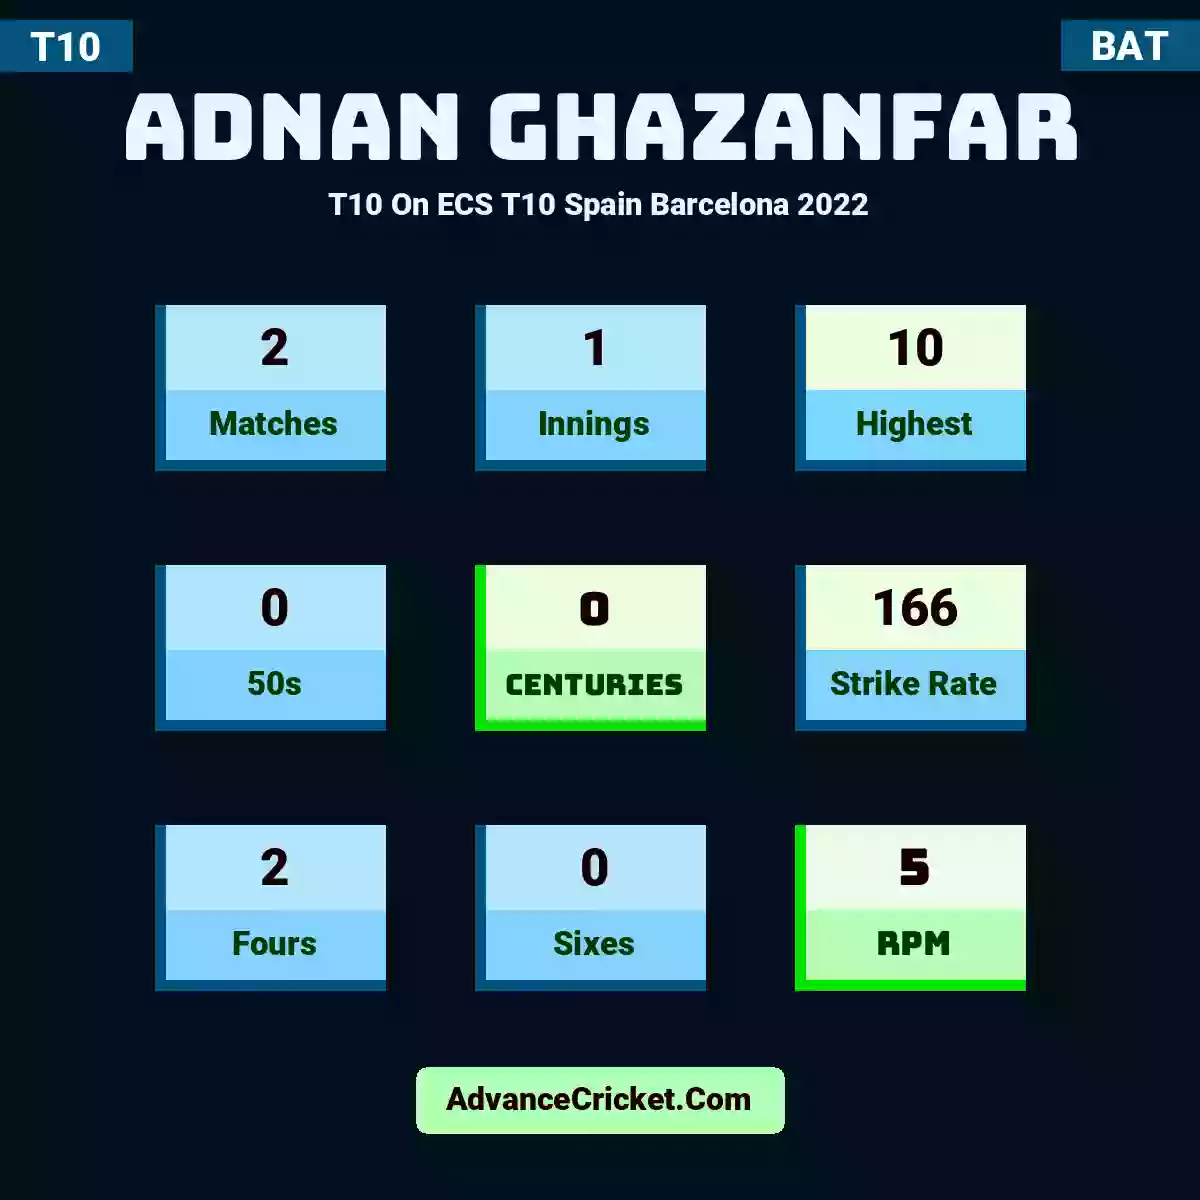 Adnan Ghazanfar T10  On ECS T10 Spain Barcelona 2022, Adnan Ghazanfar played 2 matches, scored 10 runs as highest, 0 half-centuries, and 0 centuries, with a strike rate of 166. A.Ghazanfar hit 2 fours and 0 sixes, with an RPM of 5.